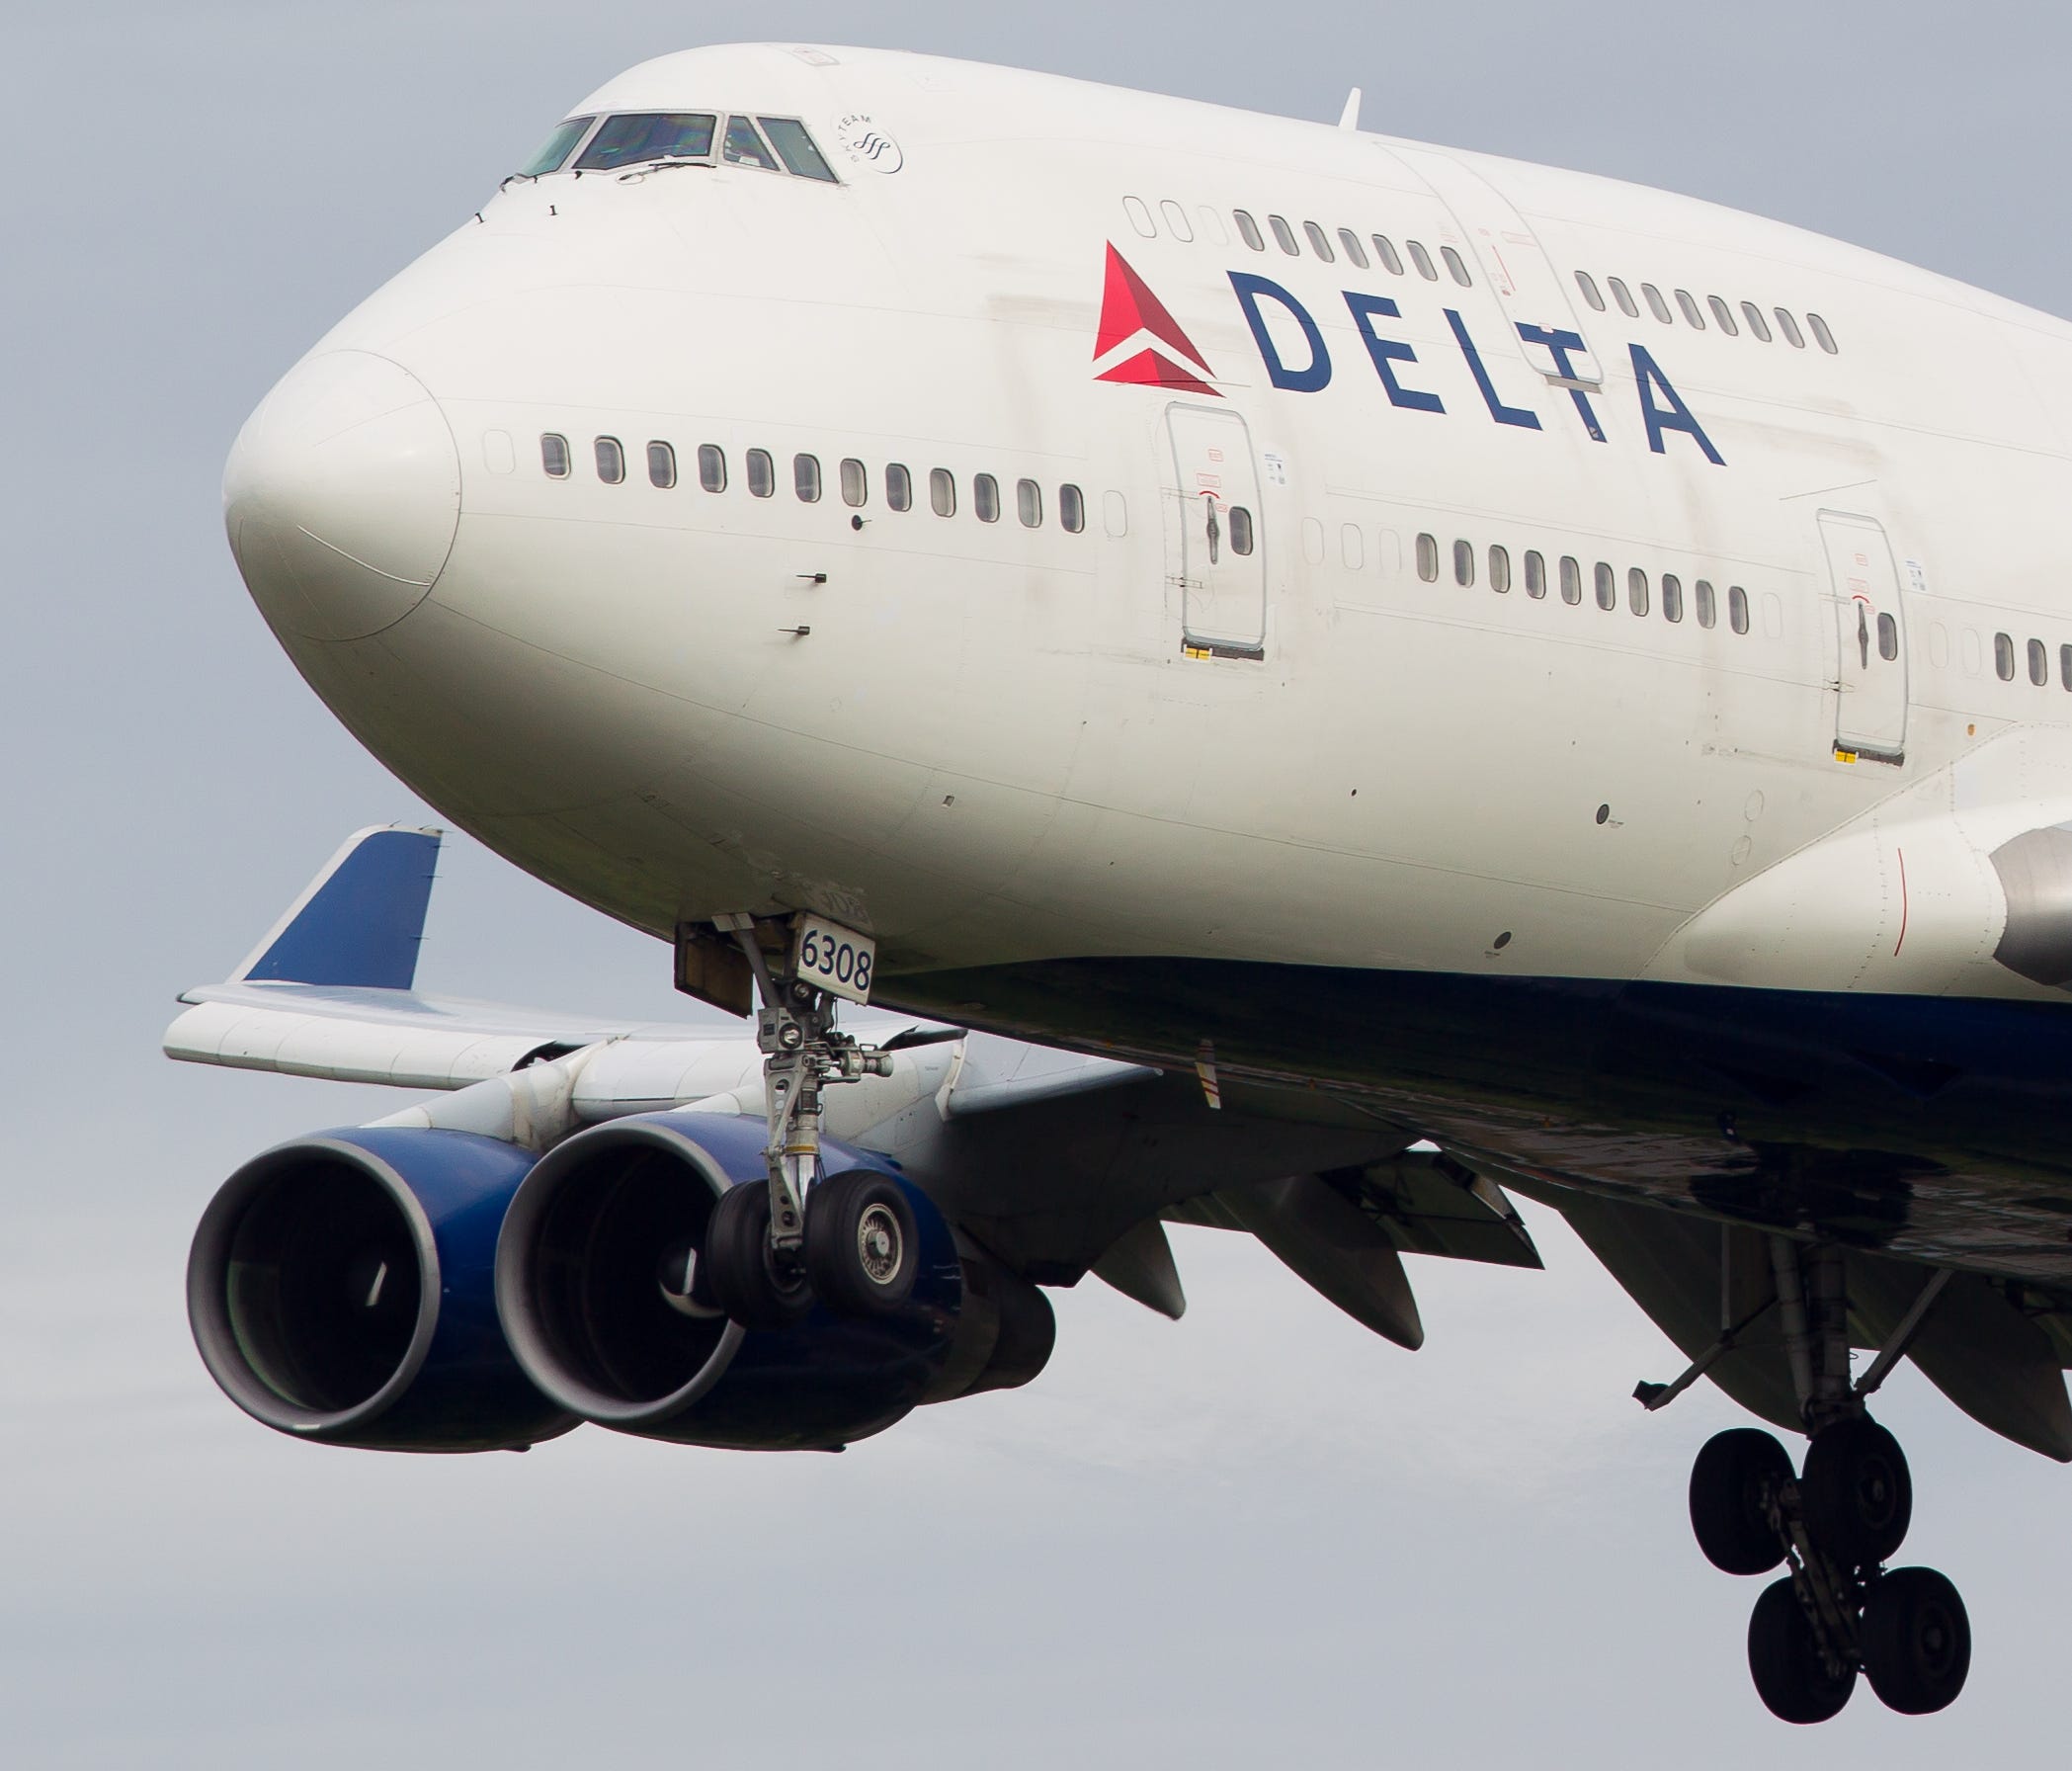 A Delta Air Lines Boeing 747-400 is seen in flight in June 2016.